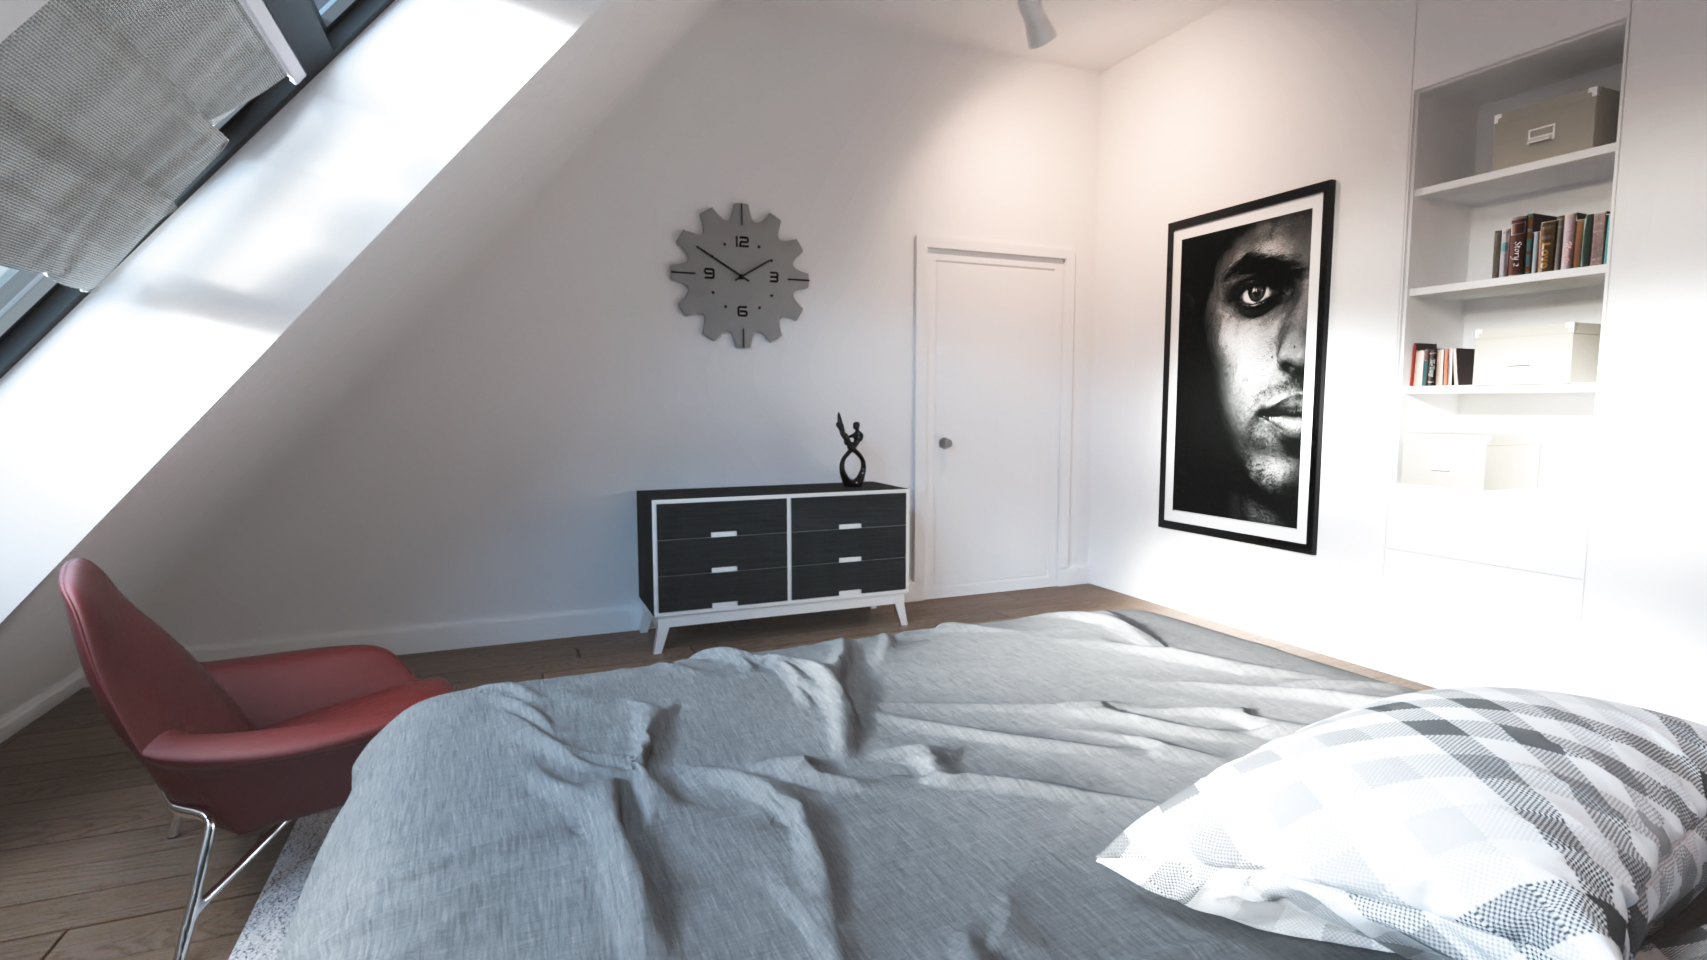 Attic Bedroom by: Digitallab3D, 3D Models by Daz 3D